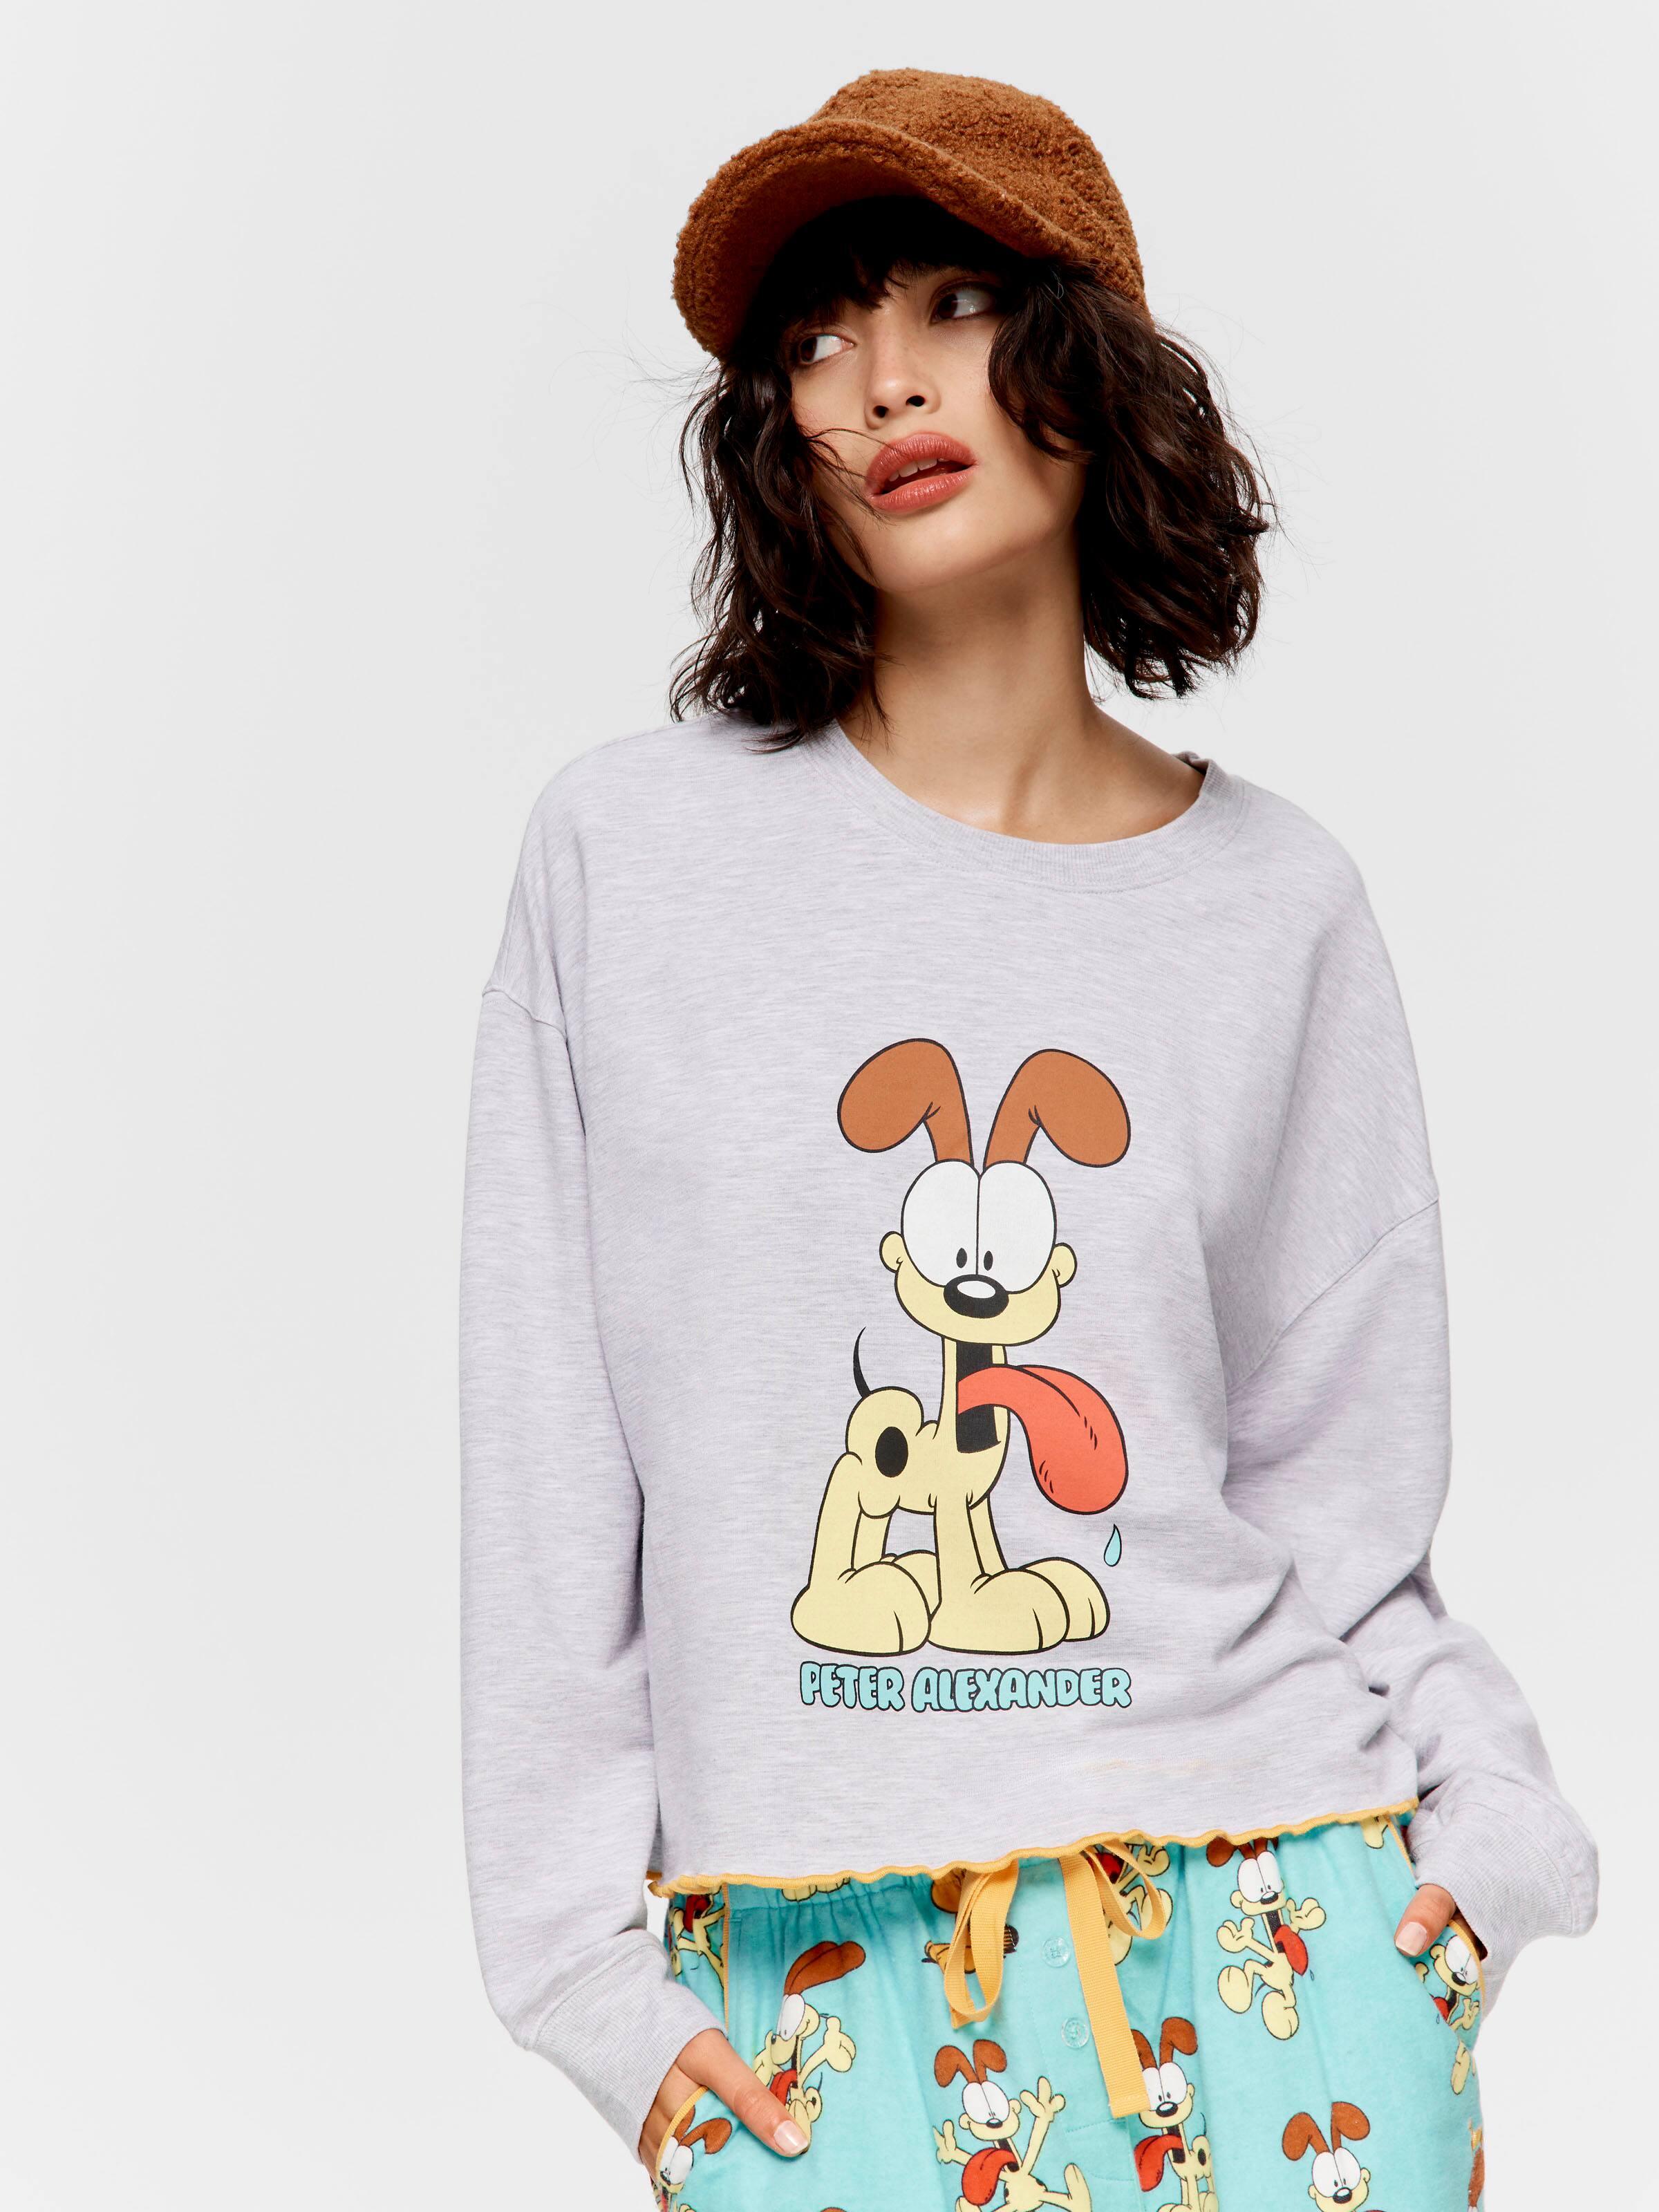 Garfield Odie Sweater